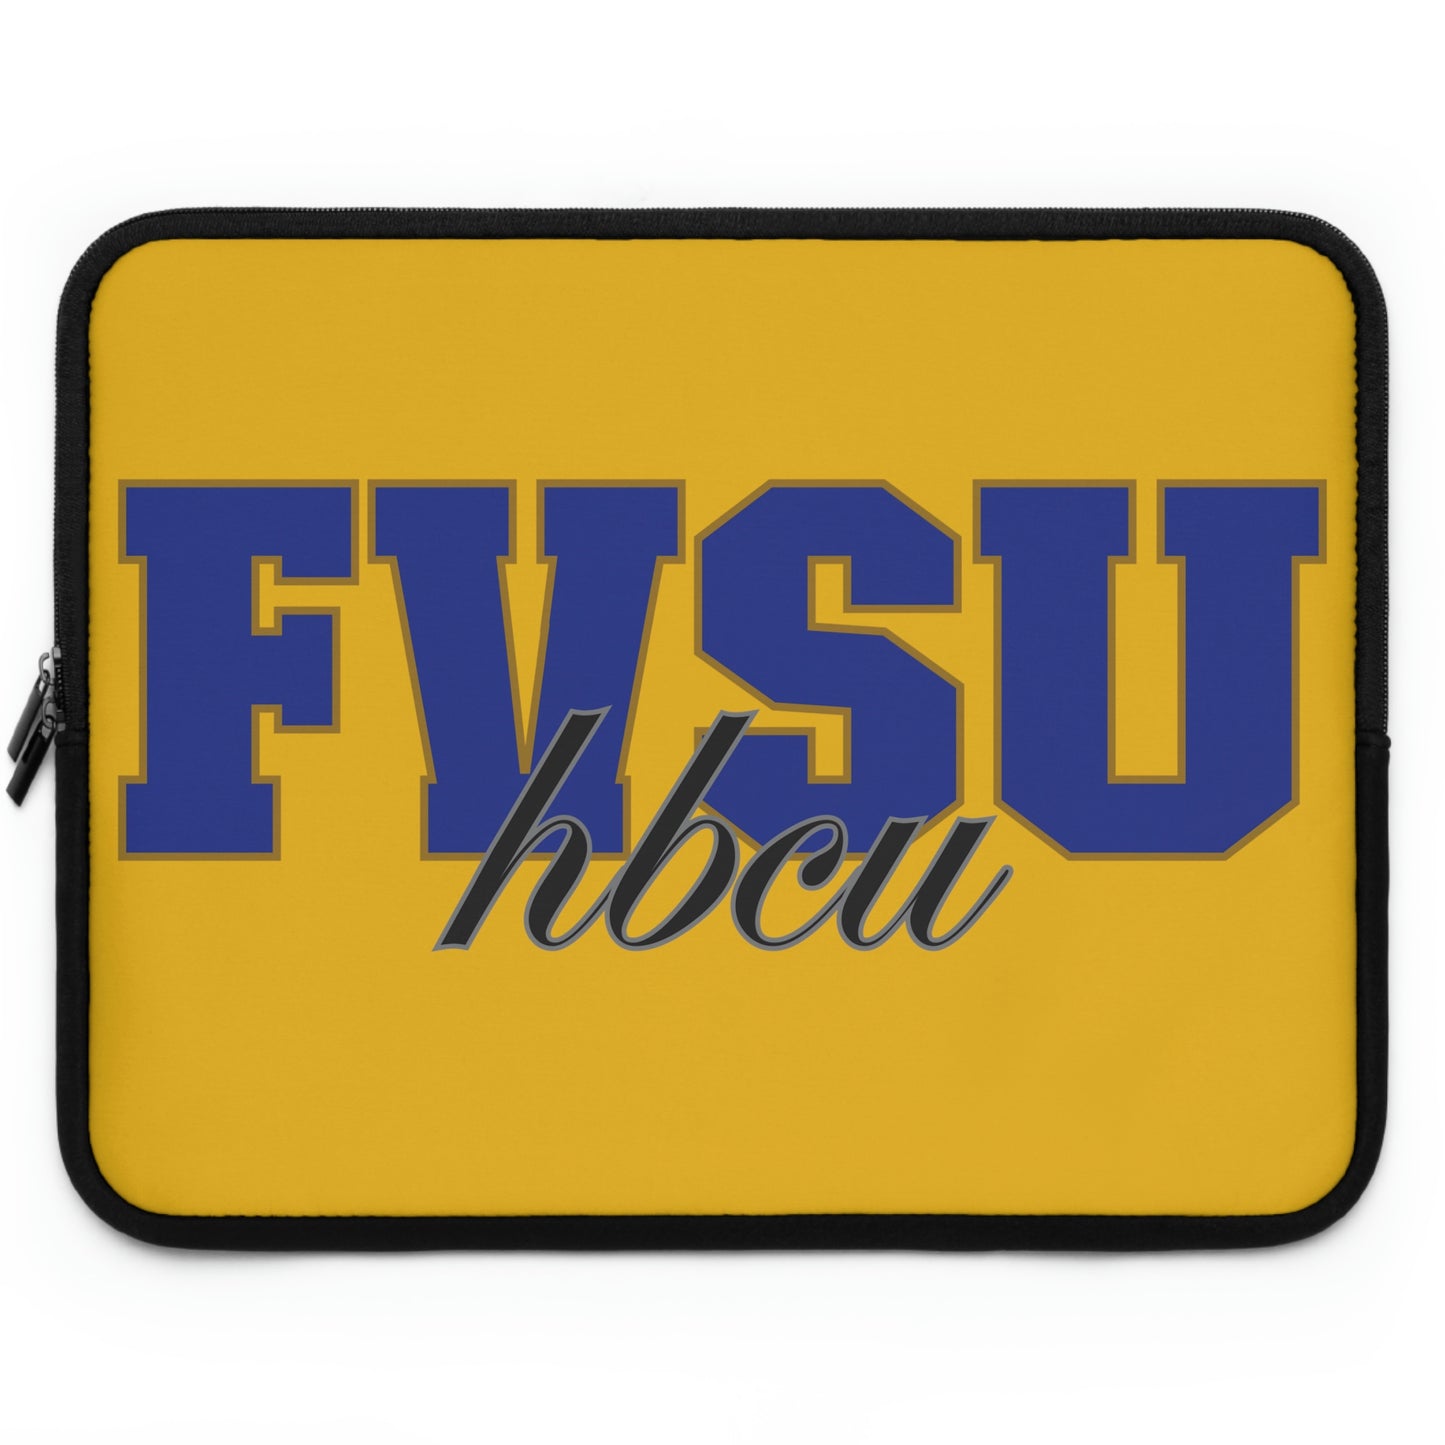 HBCU Love (Fort Valley State University/ Laptop Sleeve)